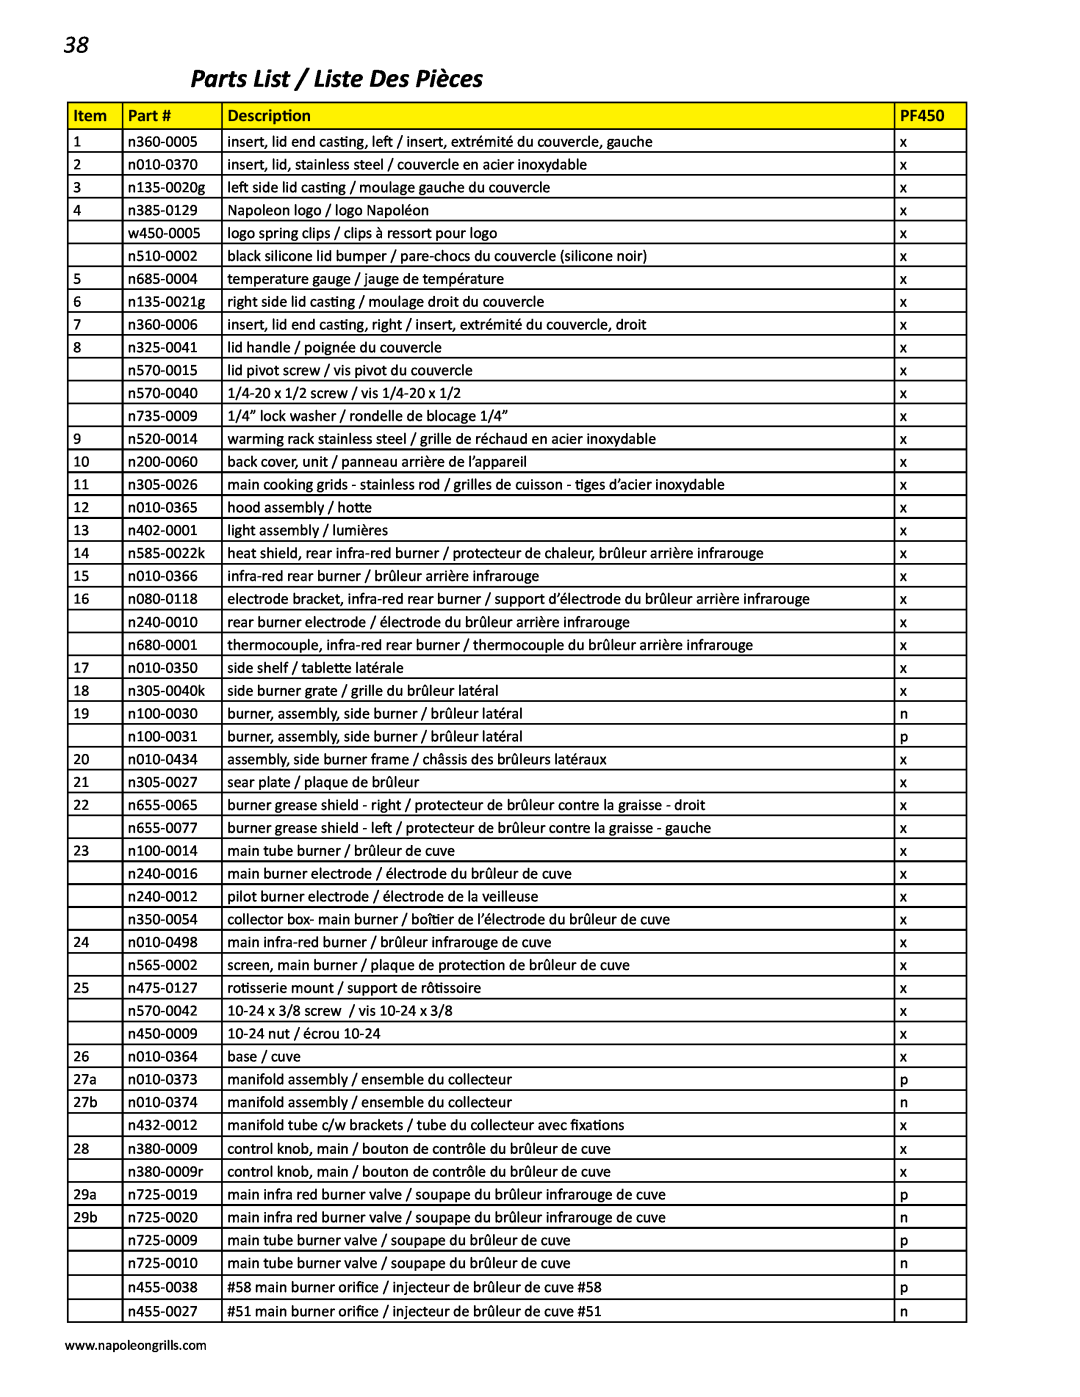 Napoleon Grills V 600, V 450 manual Parts List / Liste Des Pièces, Description, PF450 